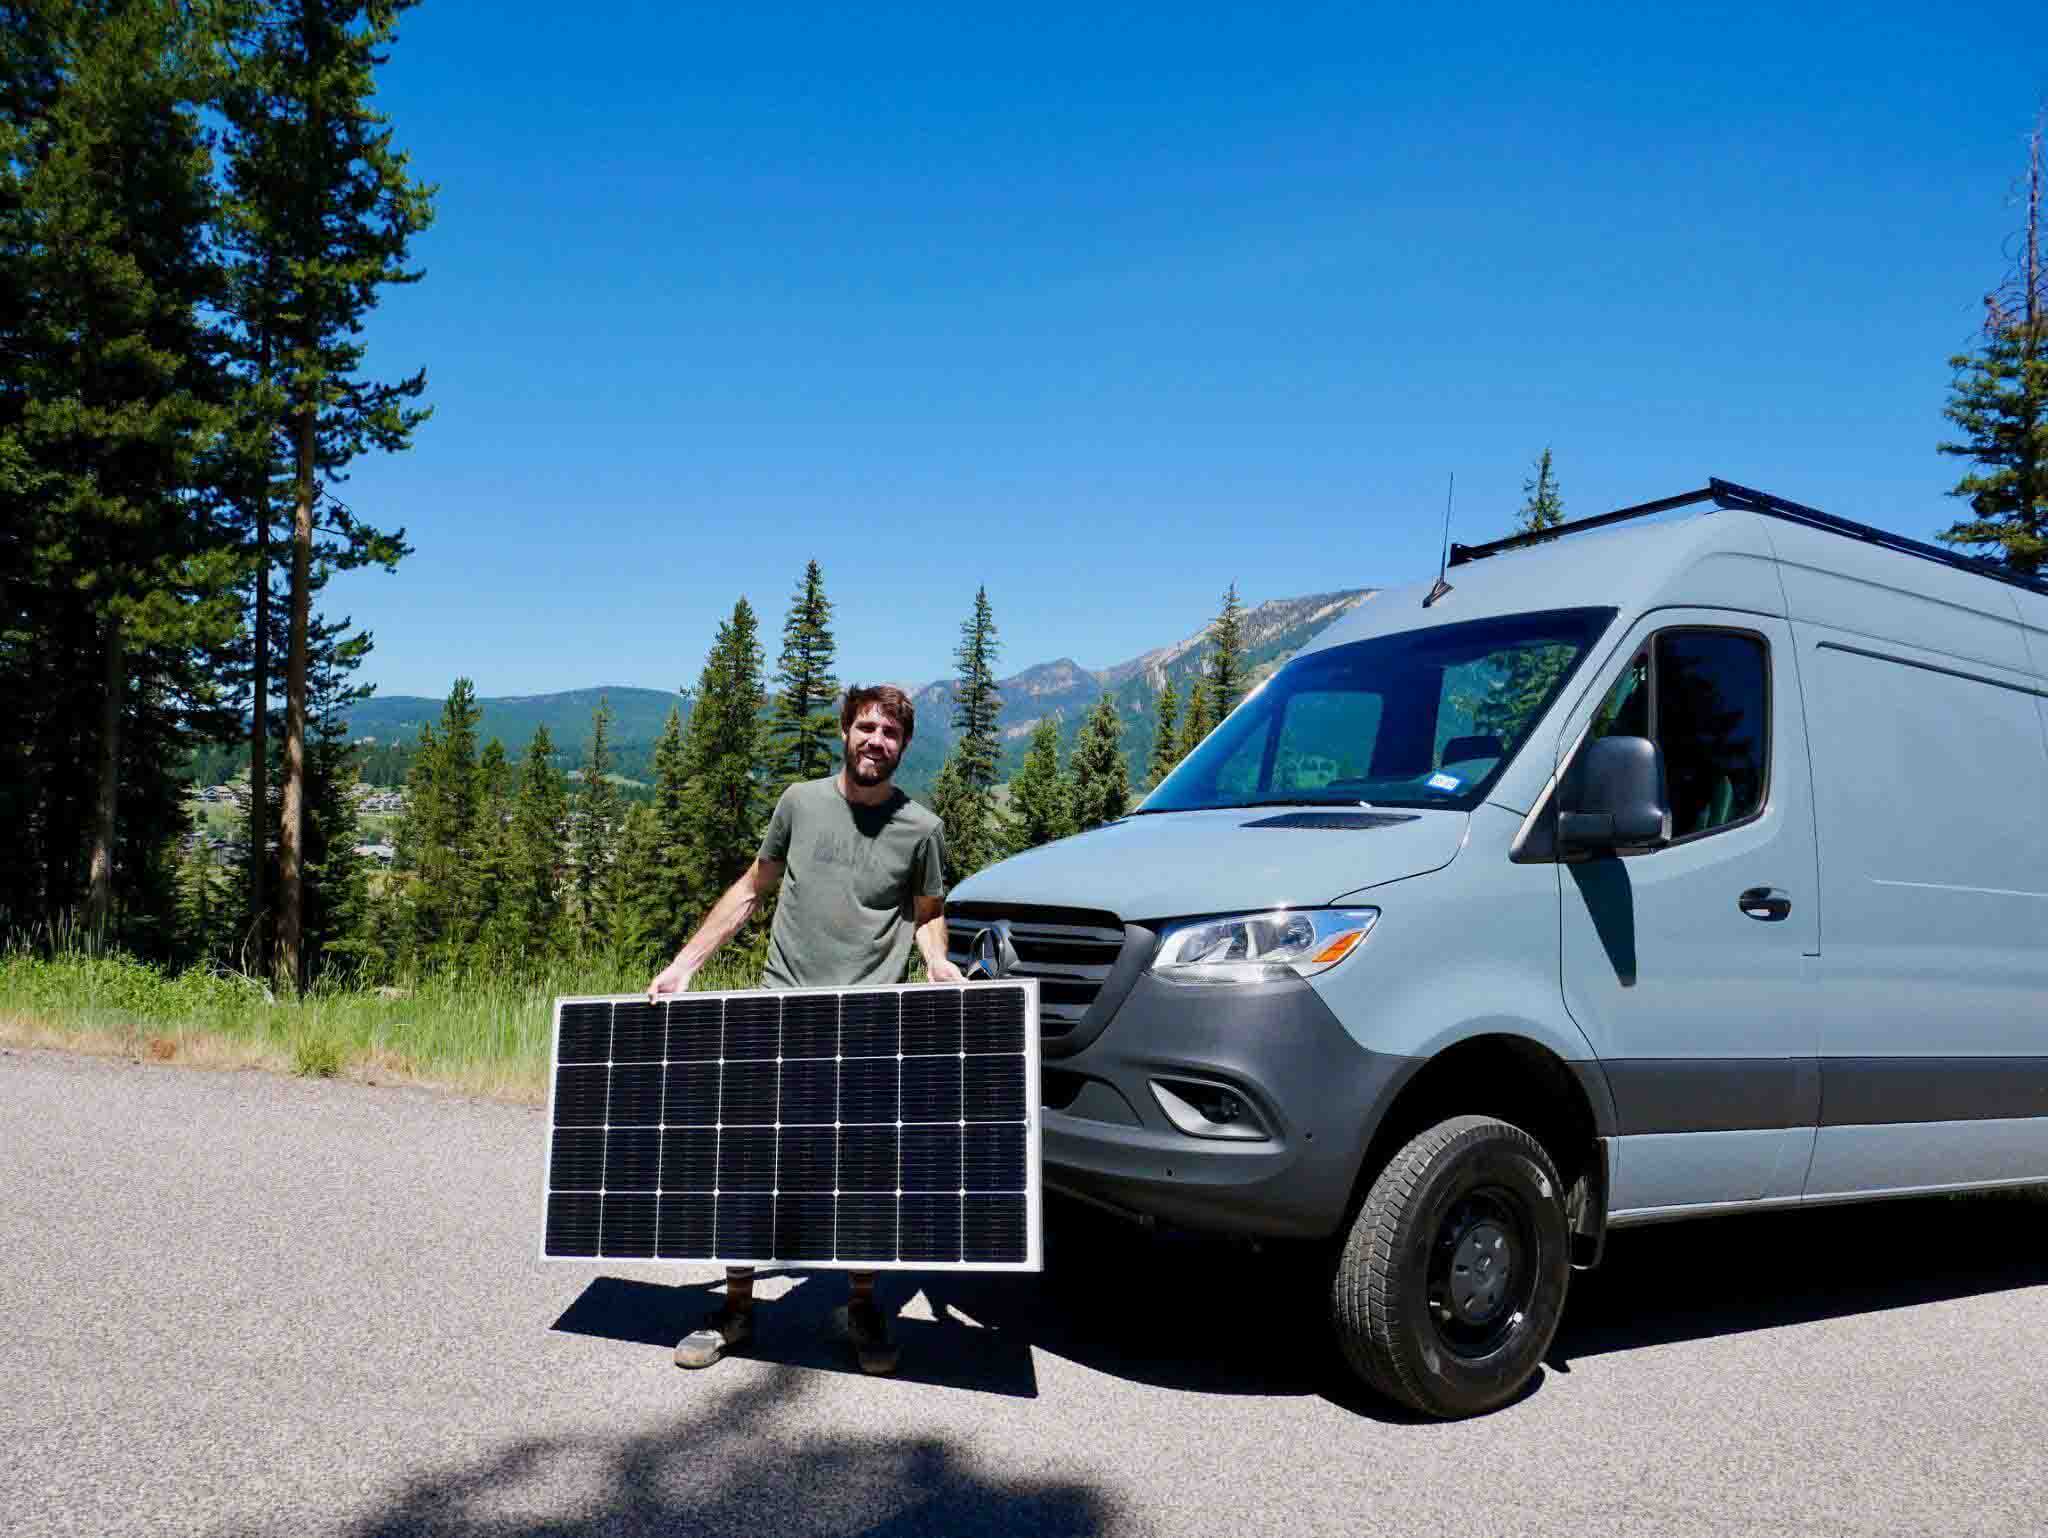 BougeRV lightweight rigid solar panels